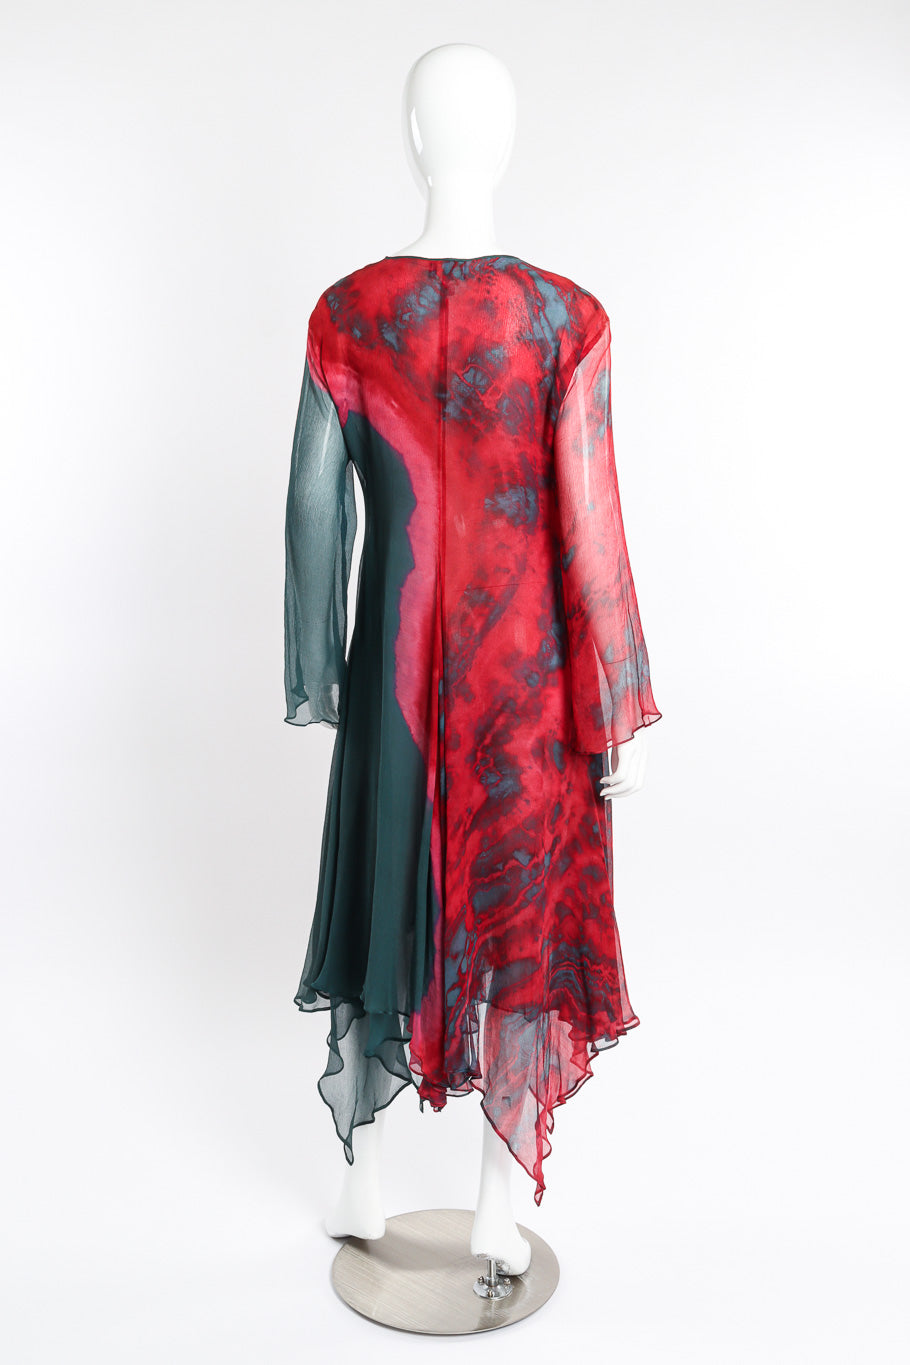 Vintage Carole Dolighan Silk Tie Dye Tunic Dress back view on mannequin @Recessla